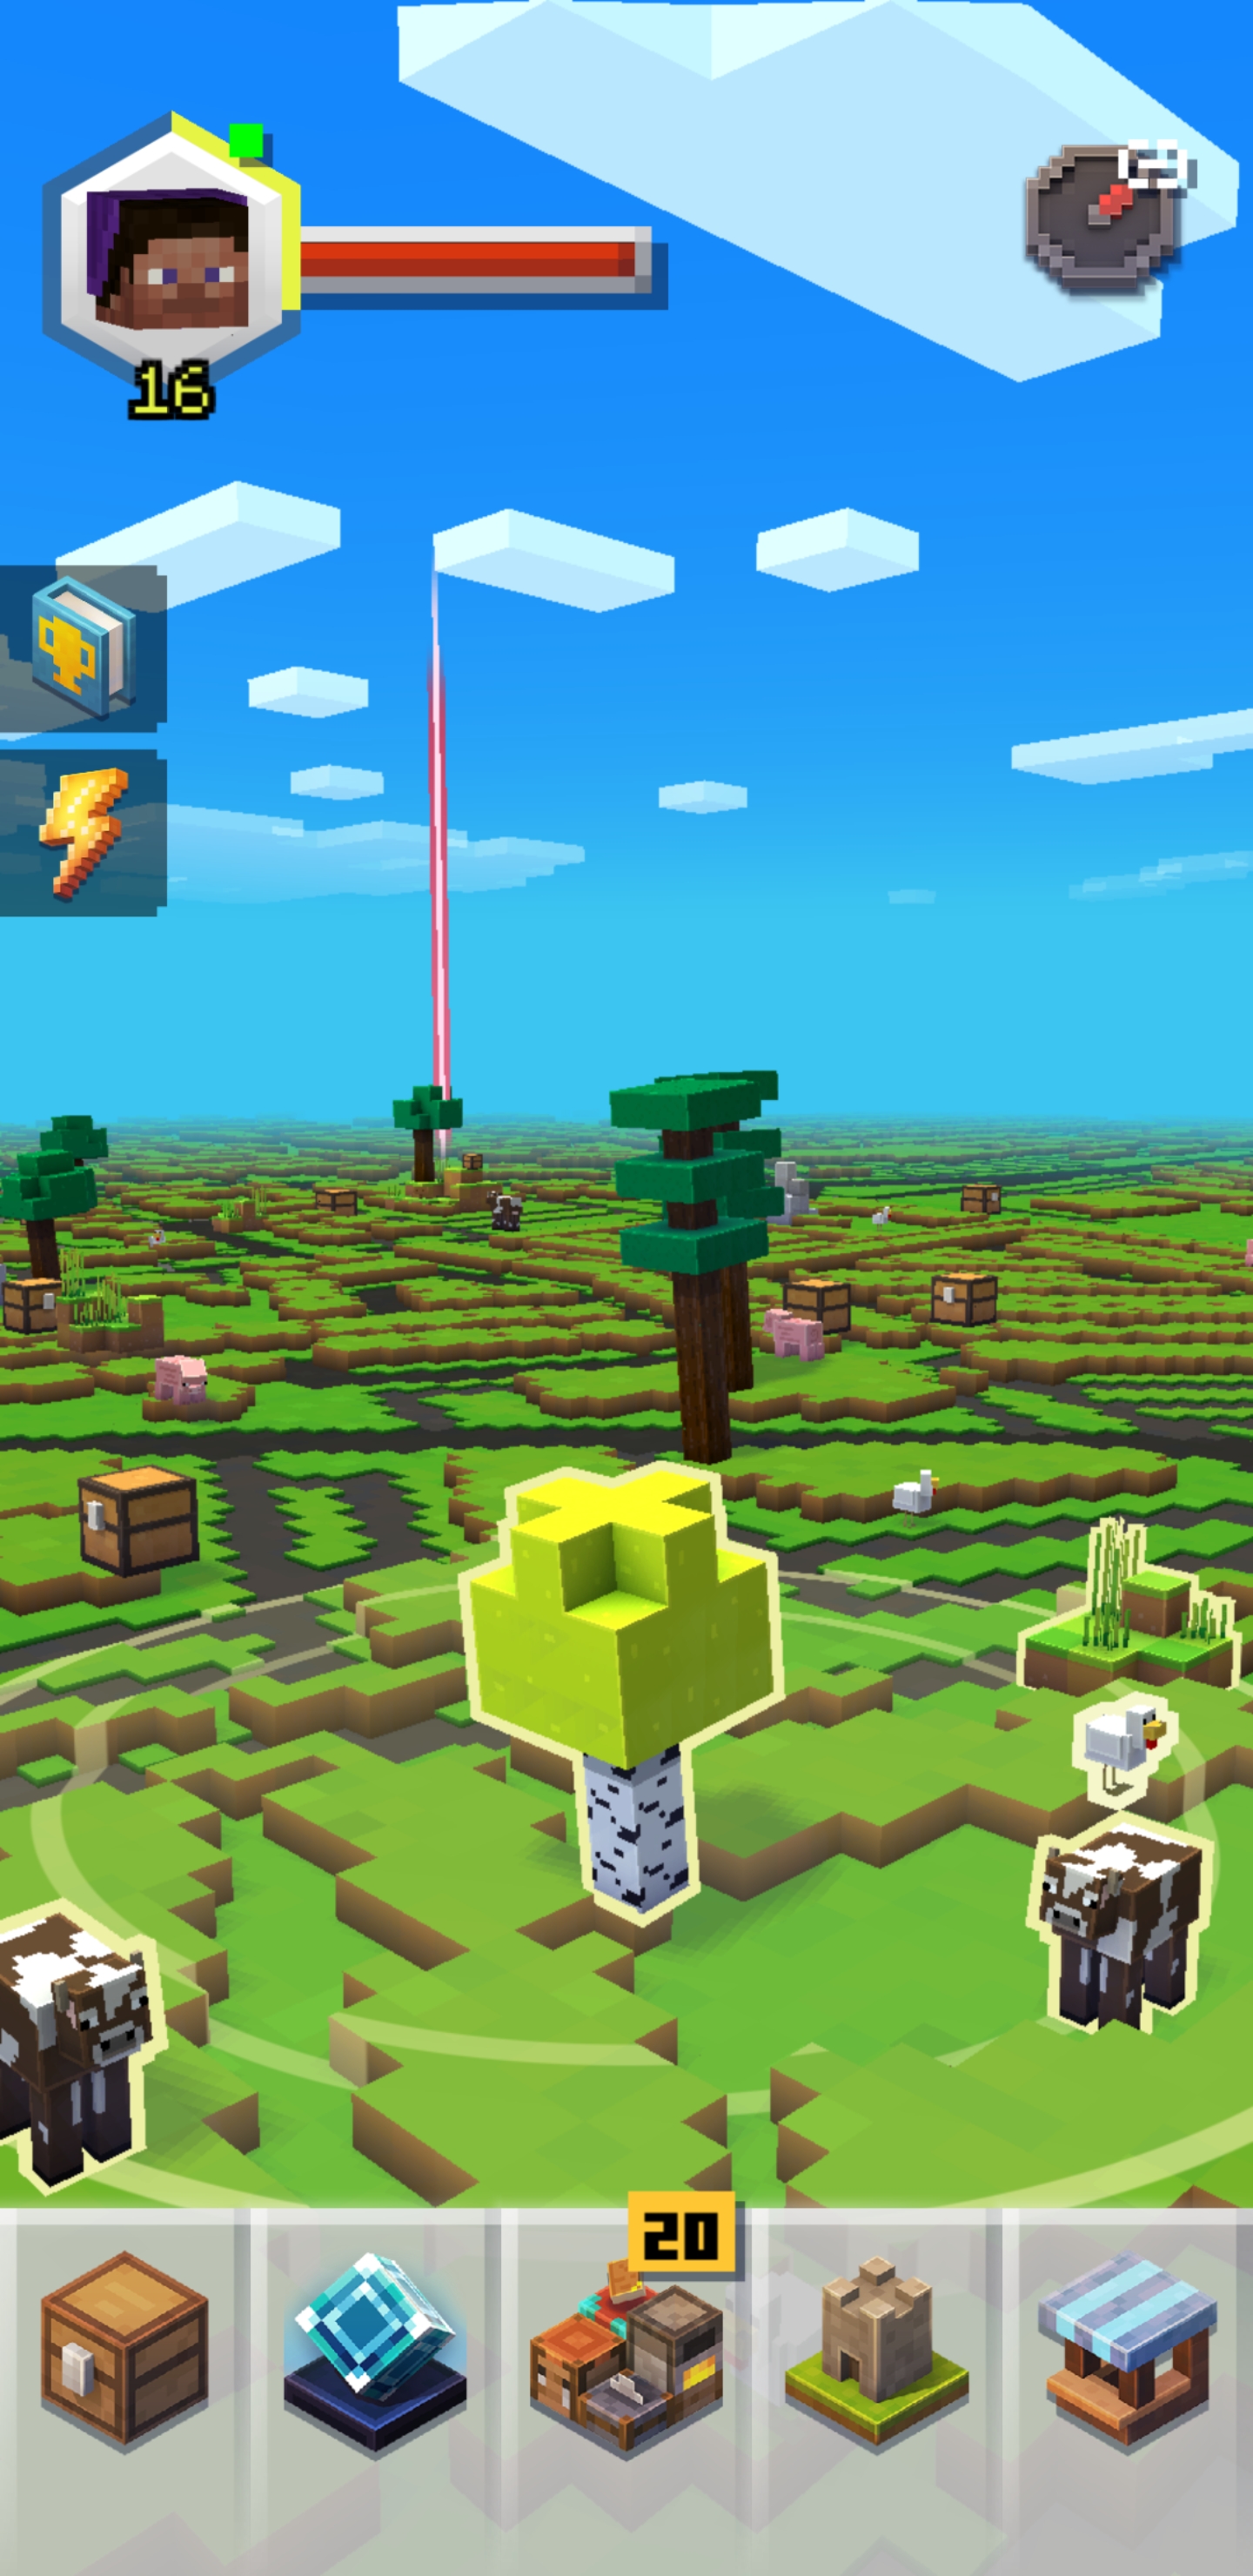 Earth in Minecraft! Minecraft Map